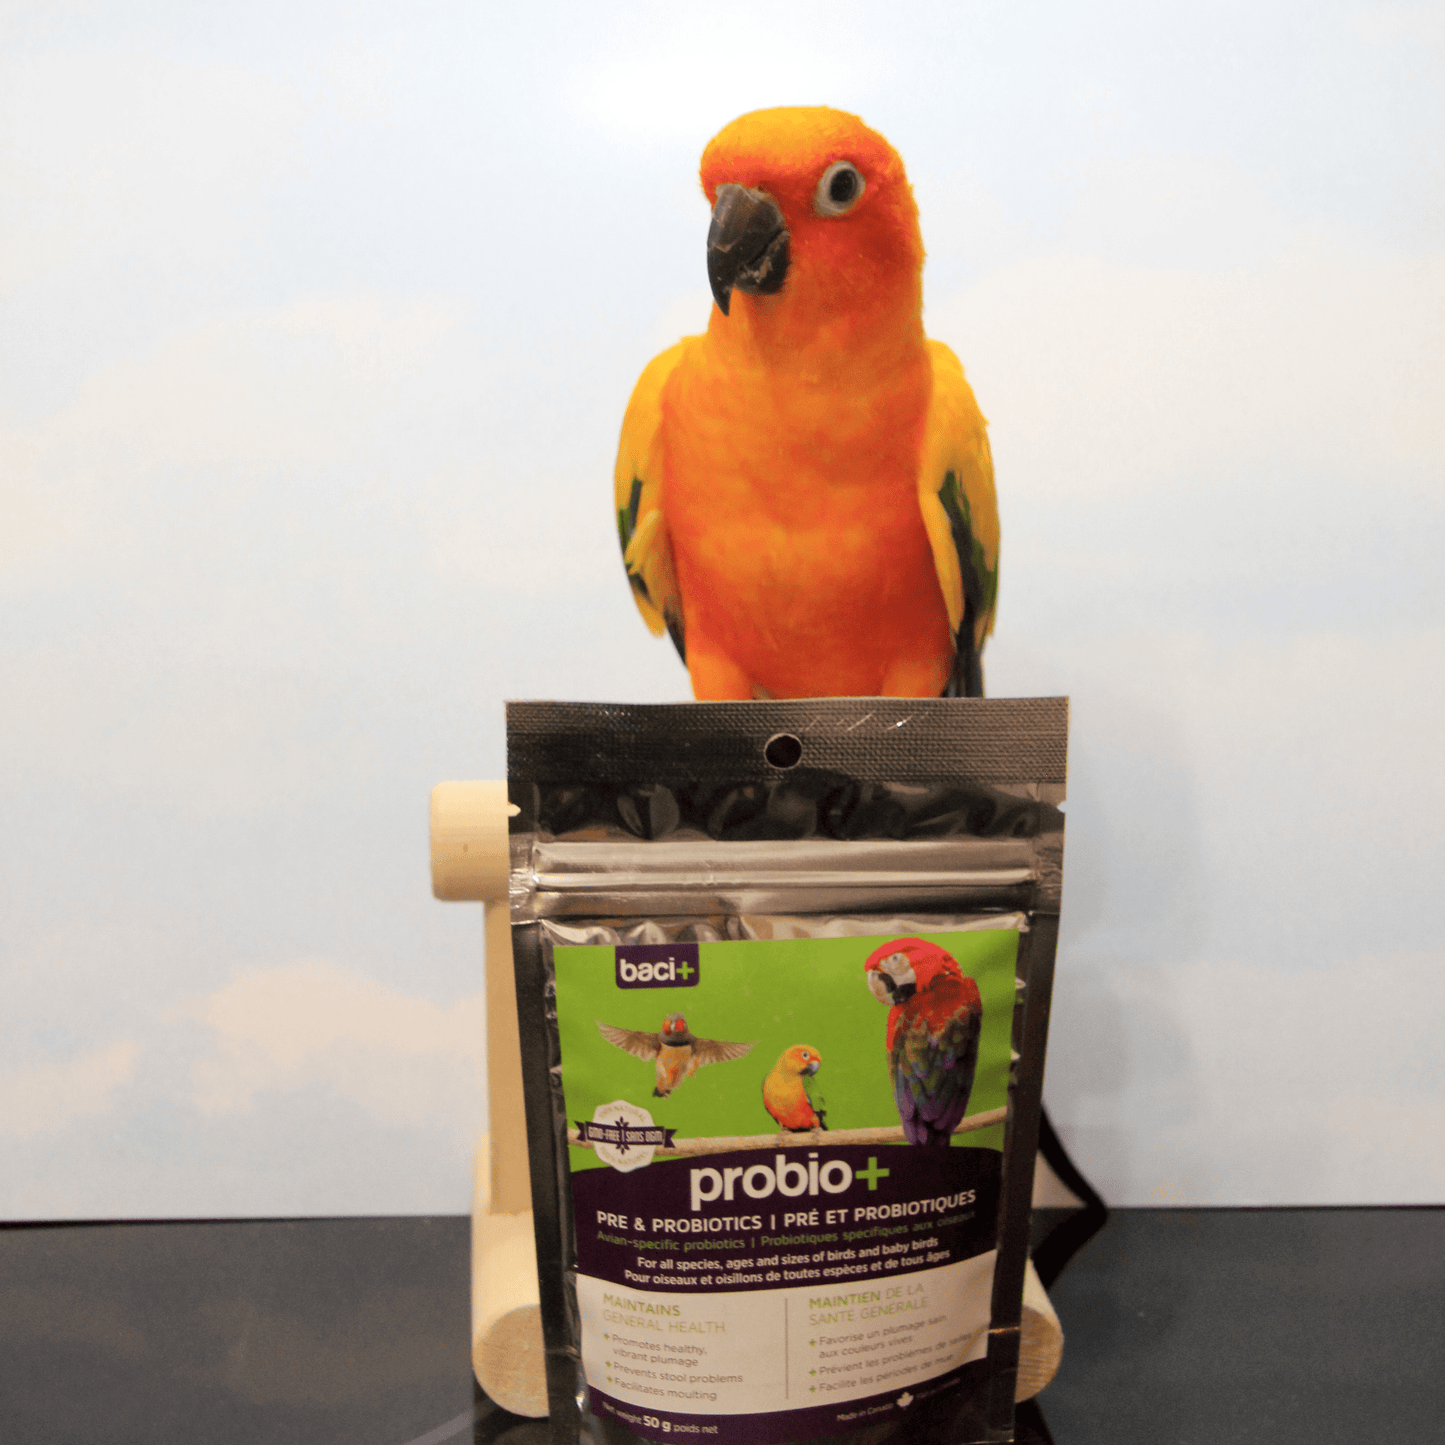 Pre and probiotics • Promotes and maintains a healthy intestinal flora  | Birds